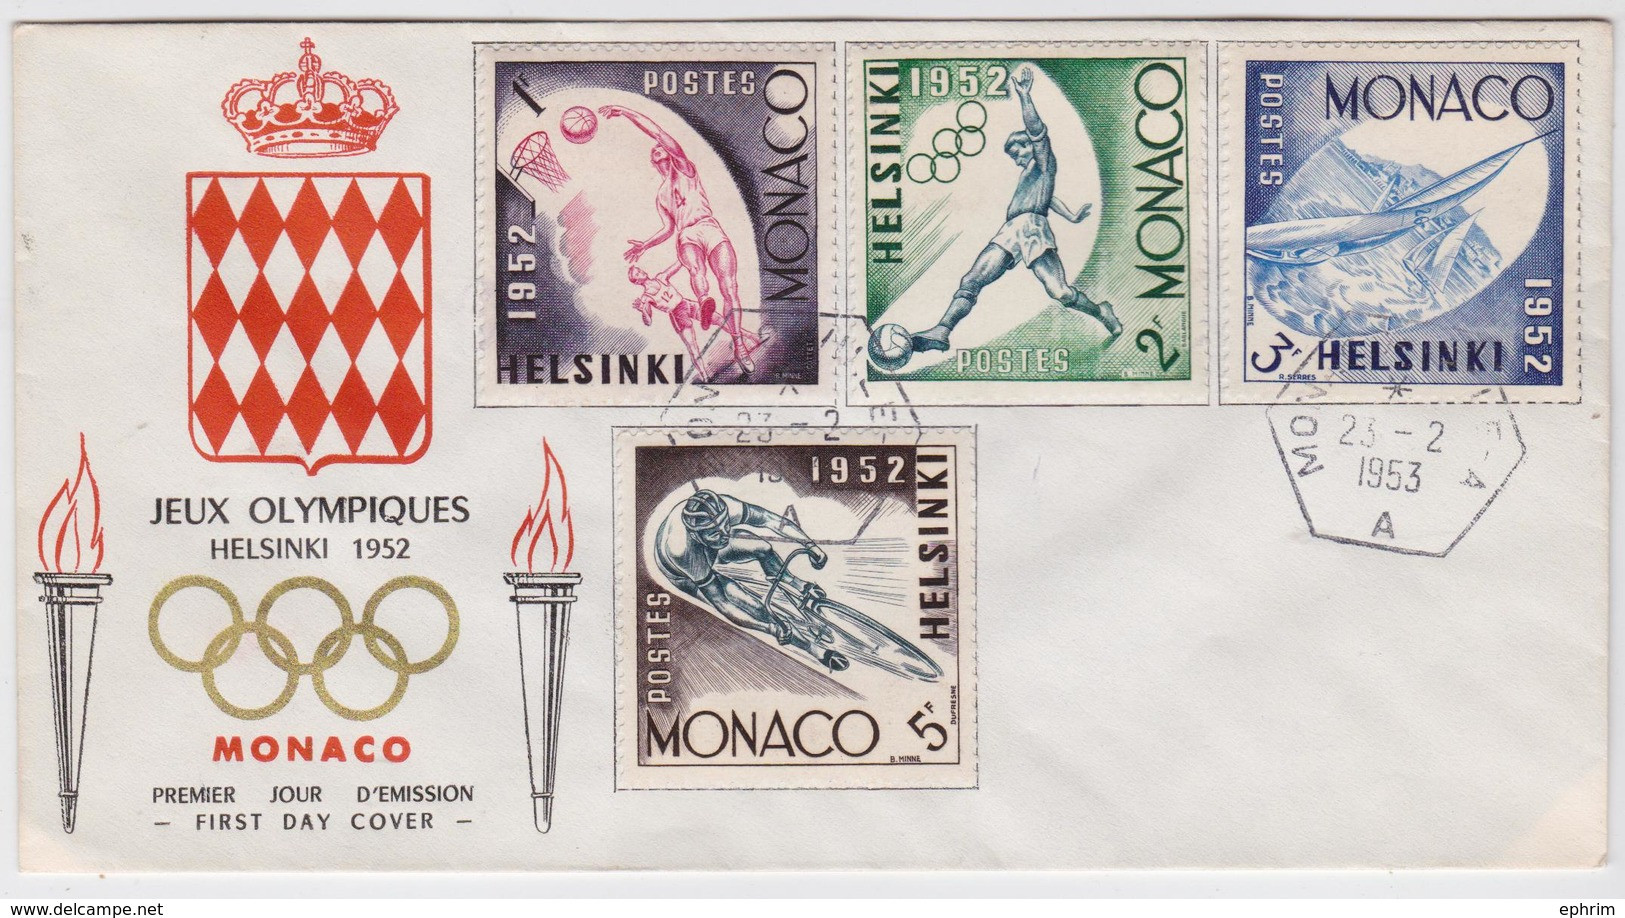 Jeux Olympiques Helsinki 1952 - FDC Enveloppe Premier Jour Monaco - Timbre Cyclisme - Basket-Ball Stamp Football Voile - Ete 1952: Helsinki